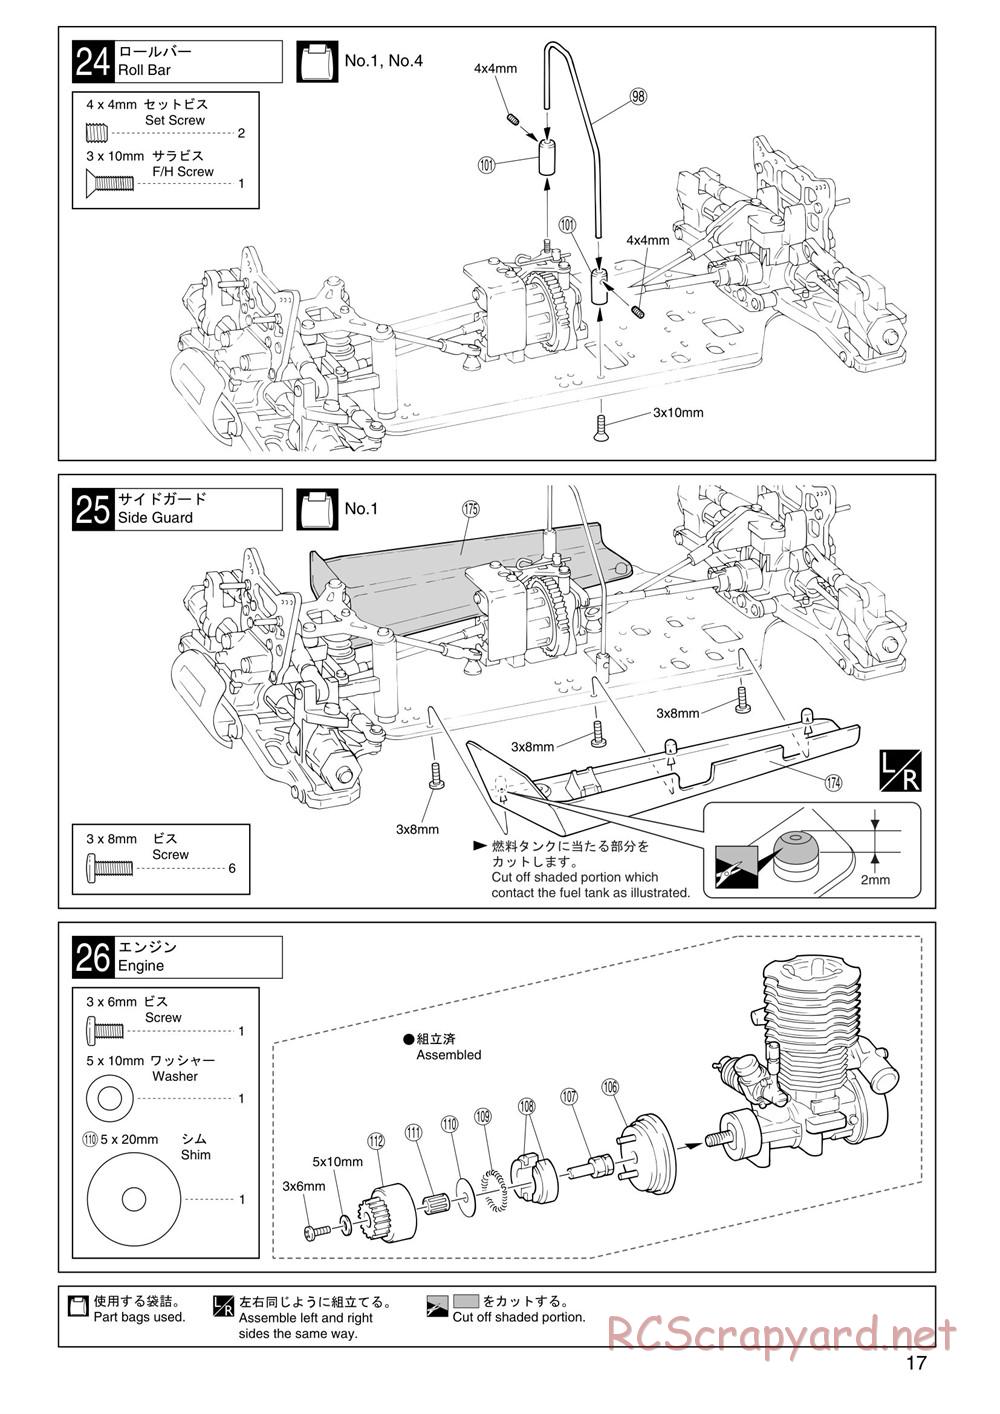 Kyosho - Super Eight GP20 Landmax 2 - Manual - Page 17